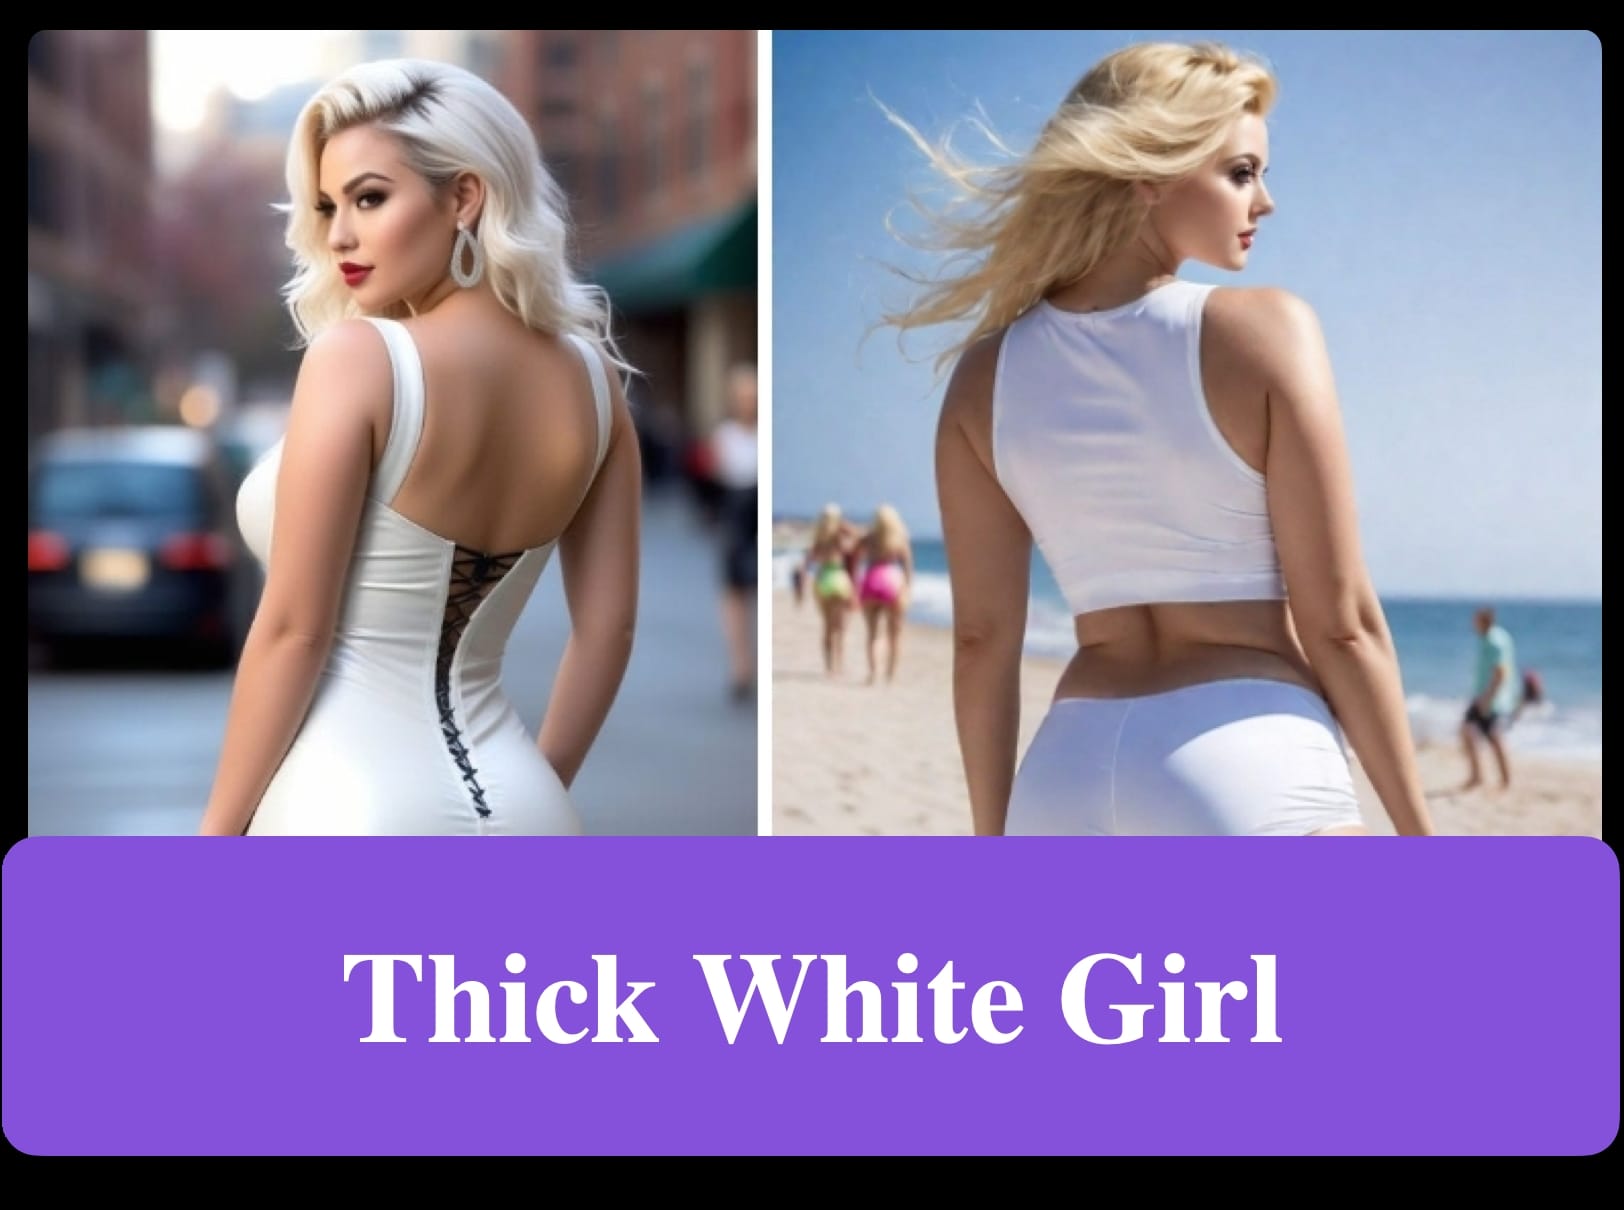 Thick White Girls: The New Trending AI Art